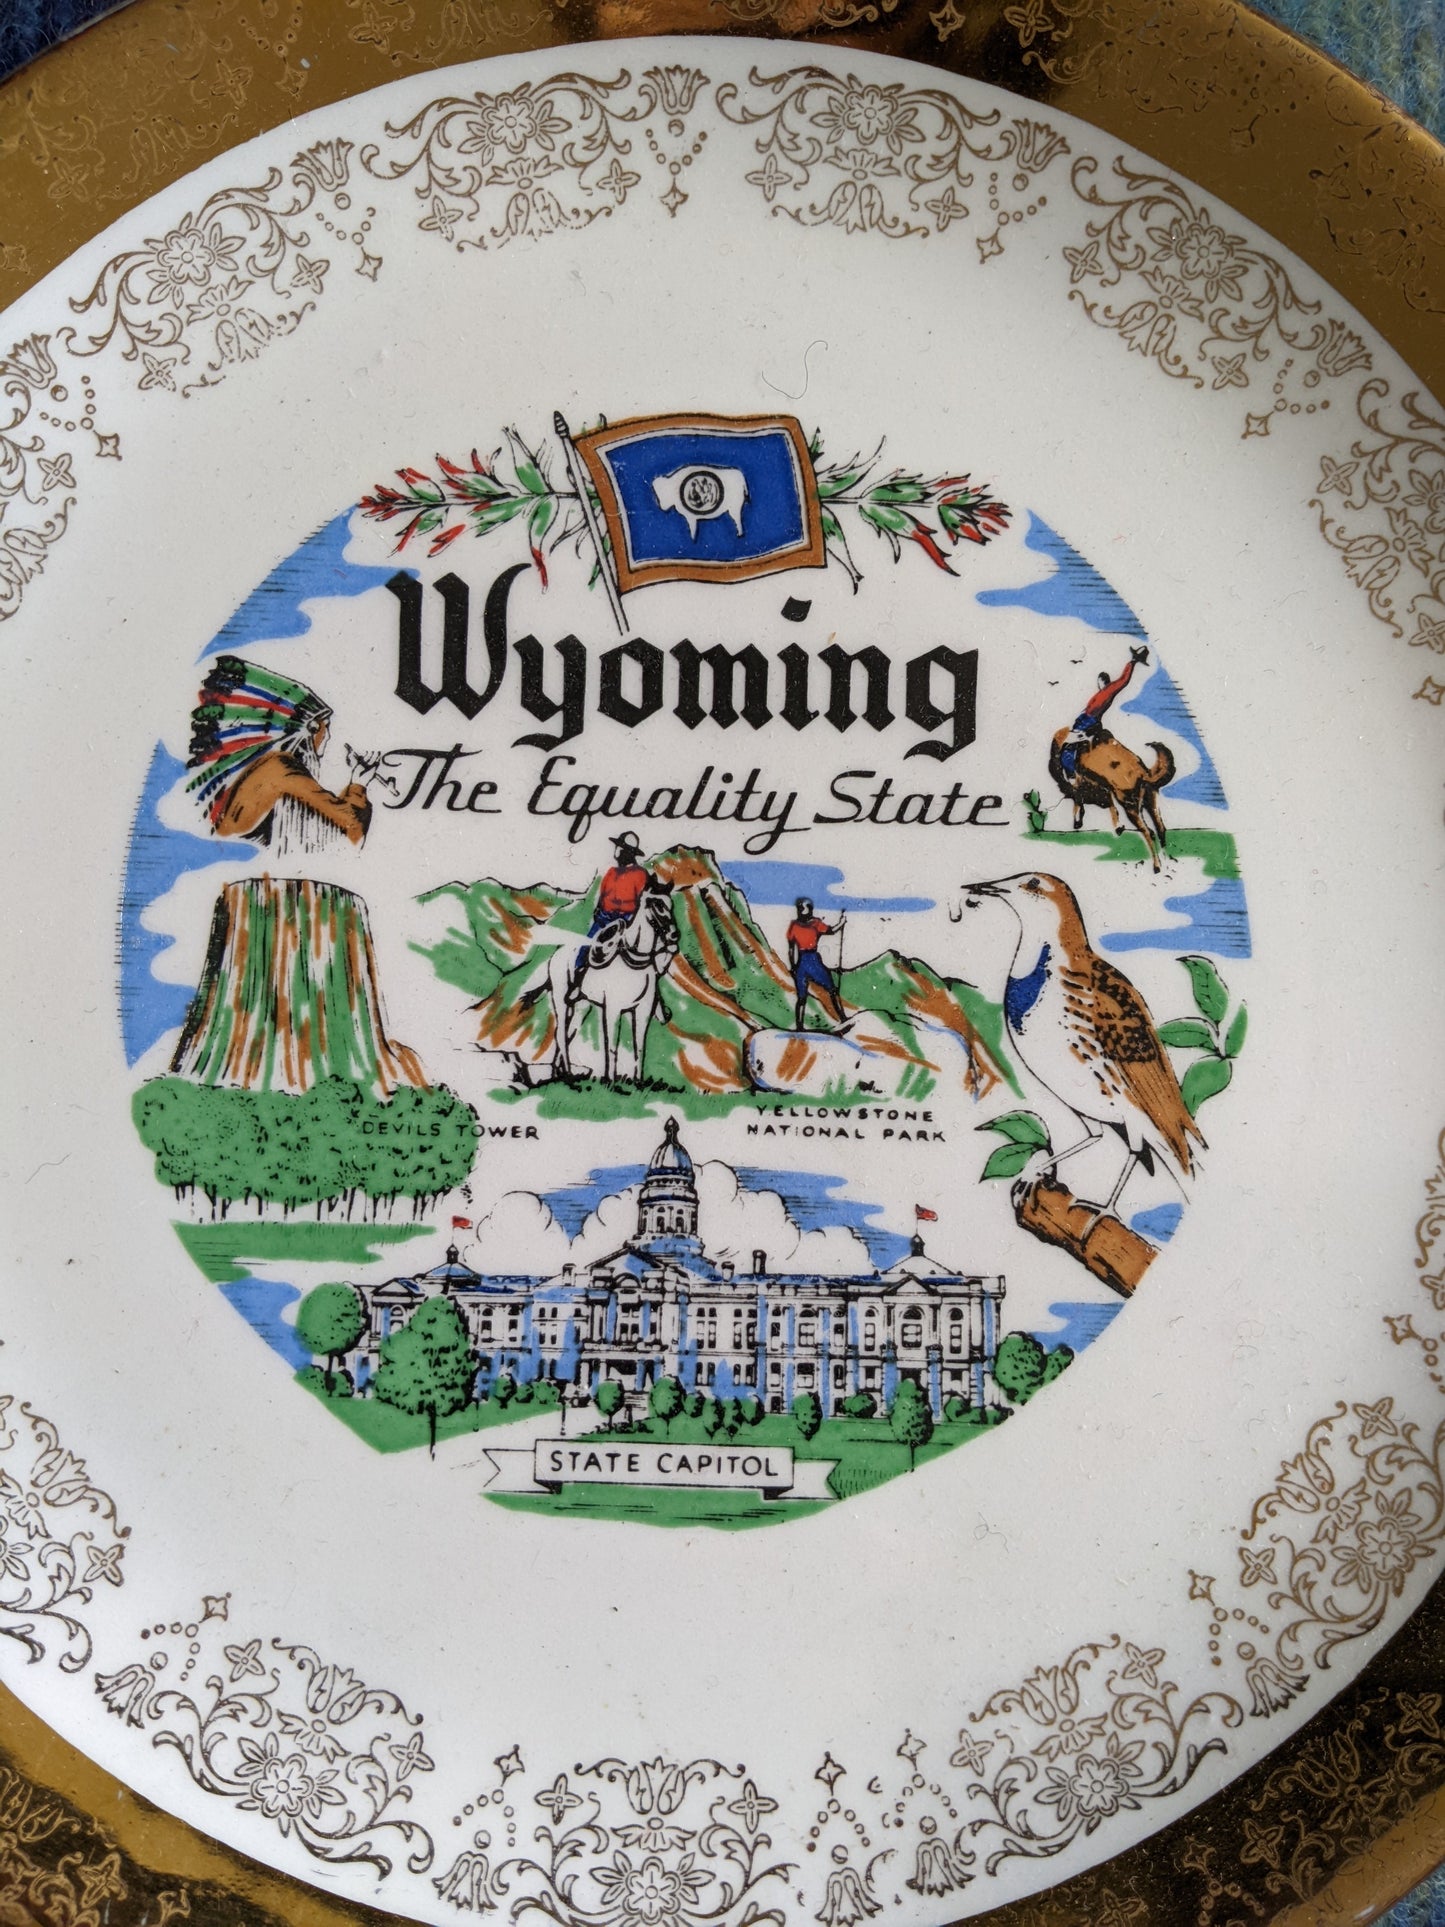 Wyoming vintage state plate,7.5"